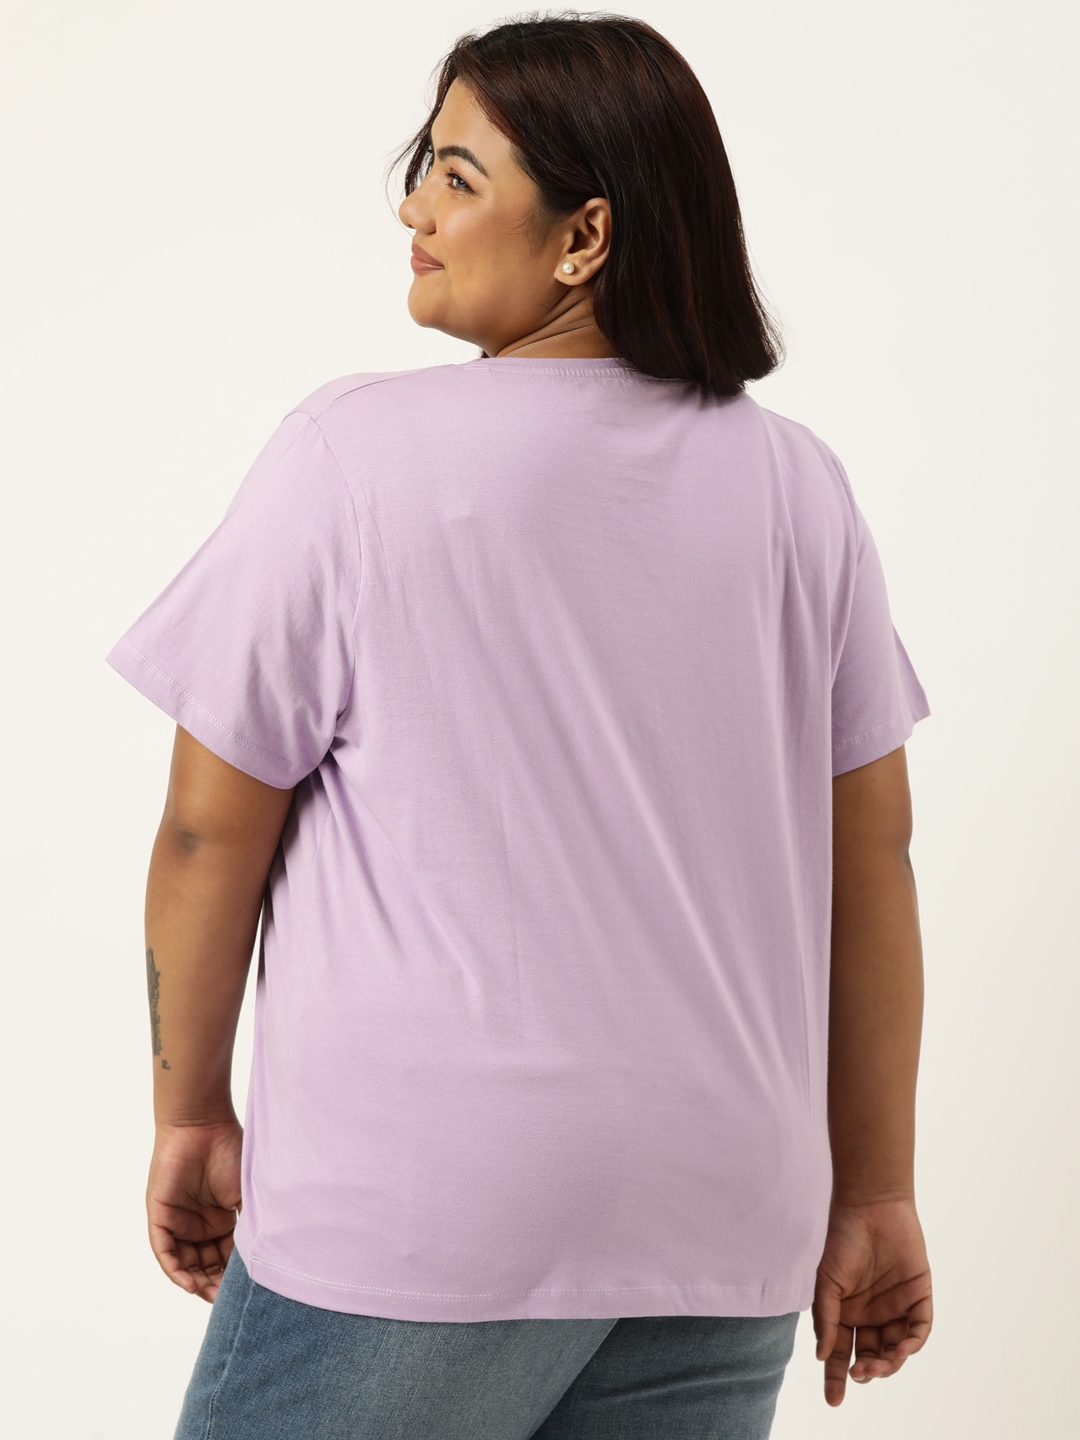 Plus Size Purple Graphic Printed Round Neck Bio Wash tshirt For women